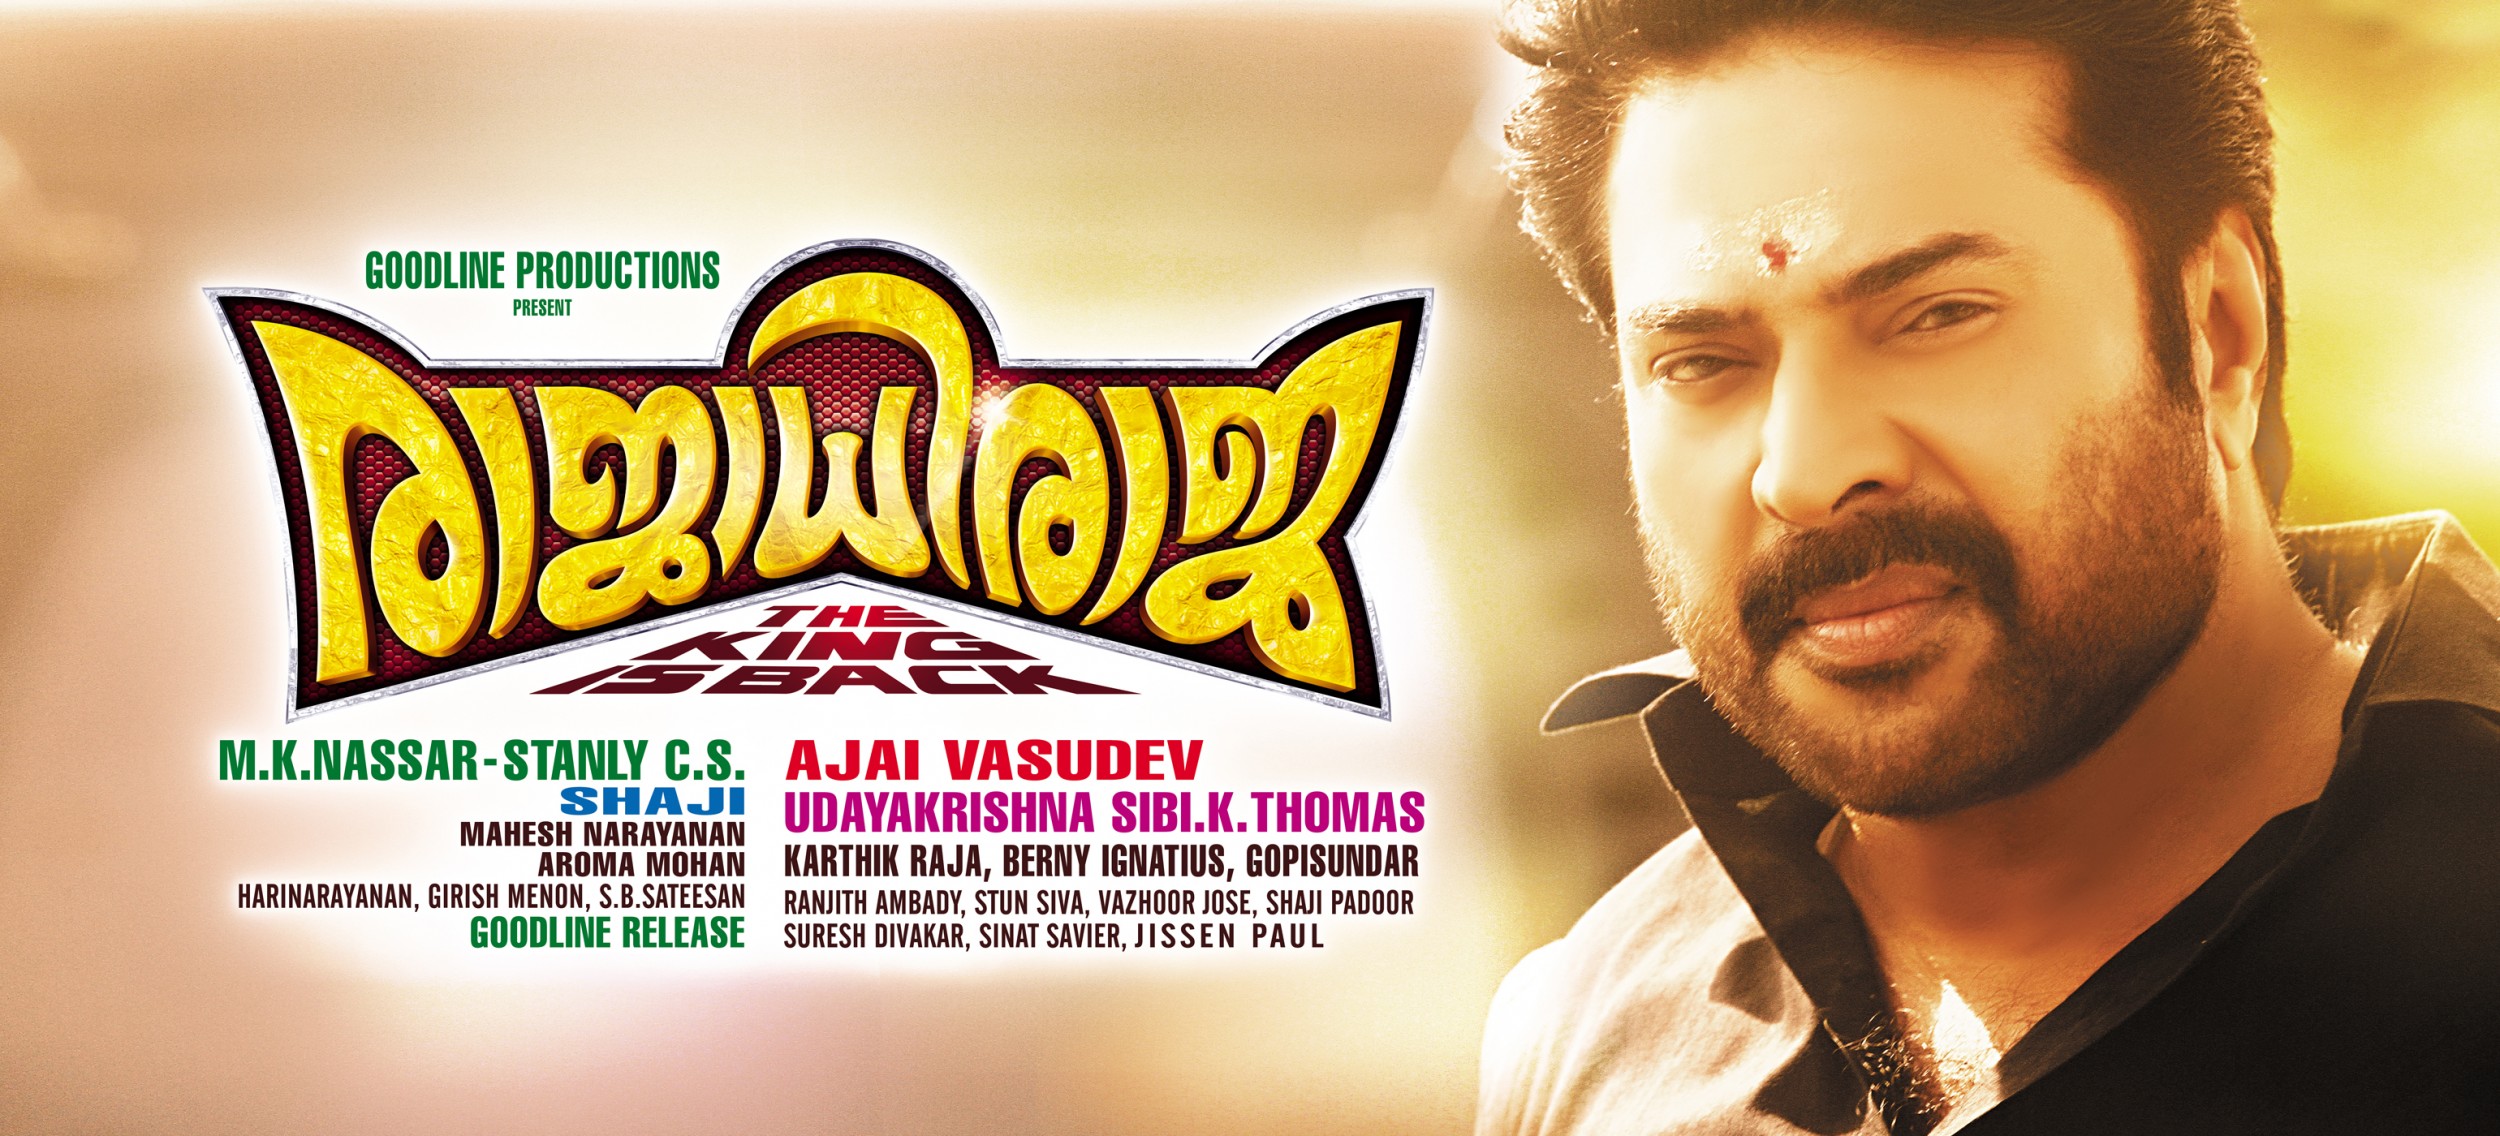 Mega Sized Movie Poster Image for RajadhiRaja (#1 of 3)